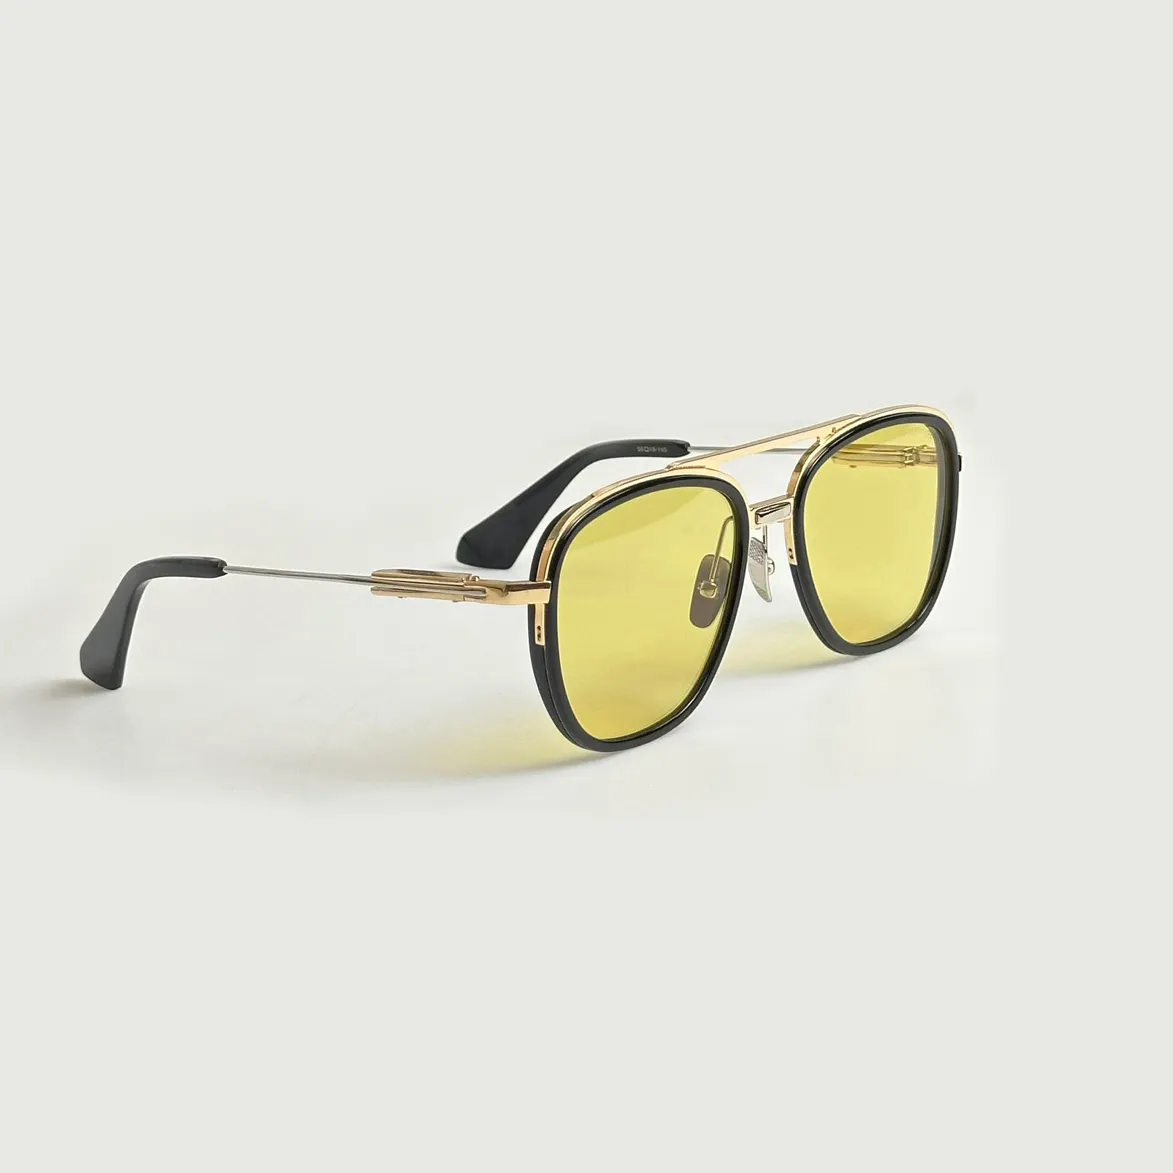 Óculos de sol amarelo dourado tipo 402 masculino verão sunnies gafas de sol sonnenbrille uv400 óculos unissex com caixa